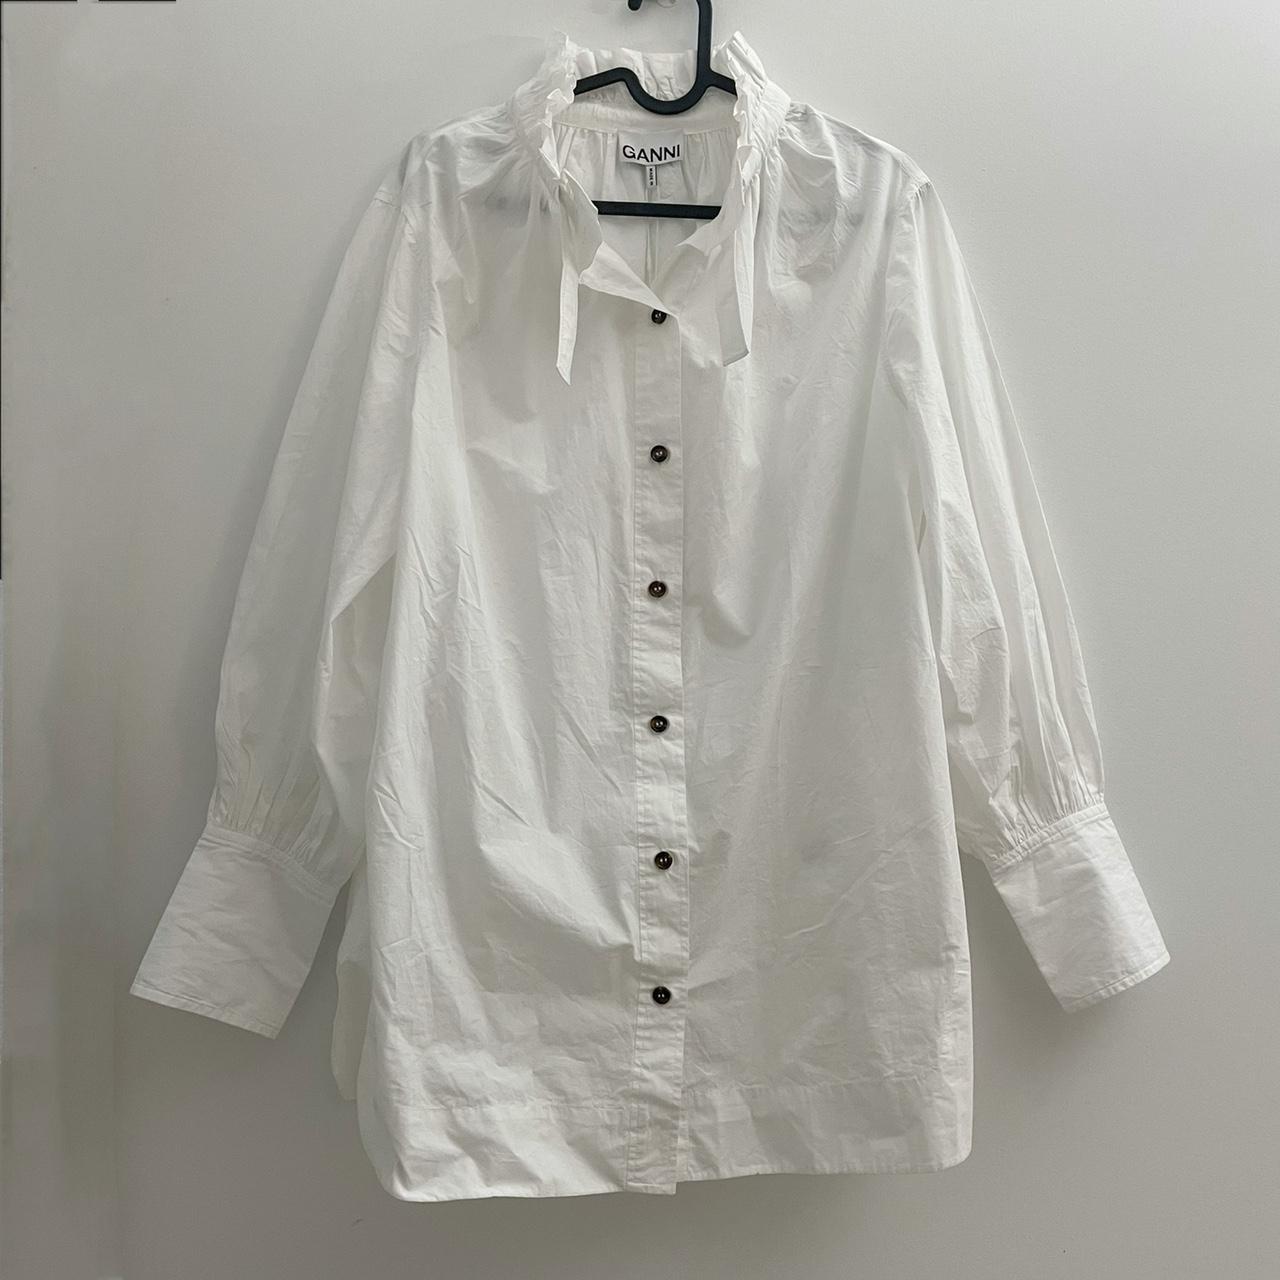 Ganni Women's White Shirt